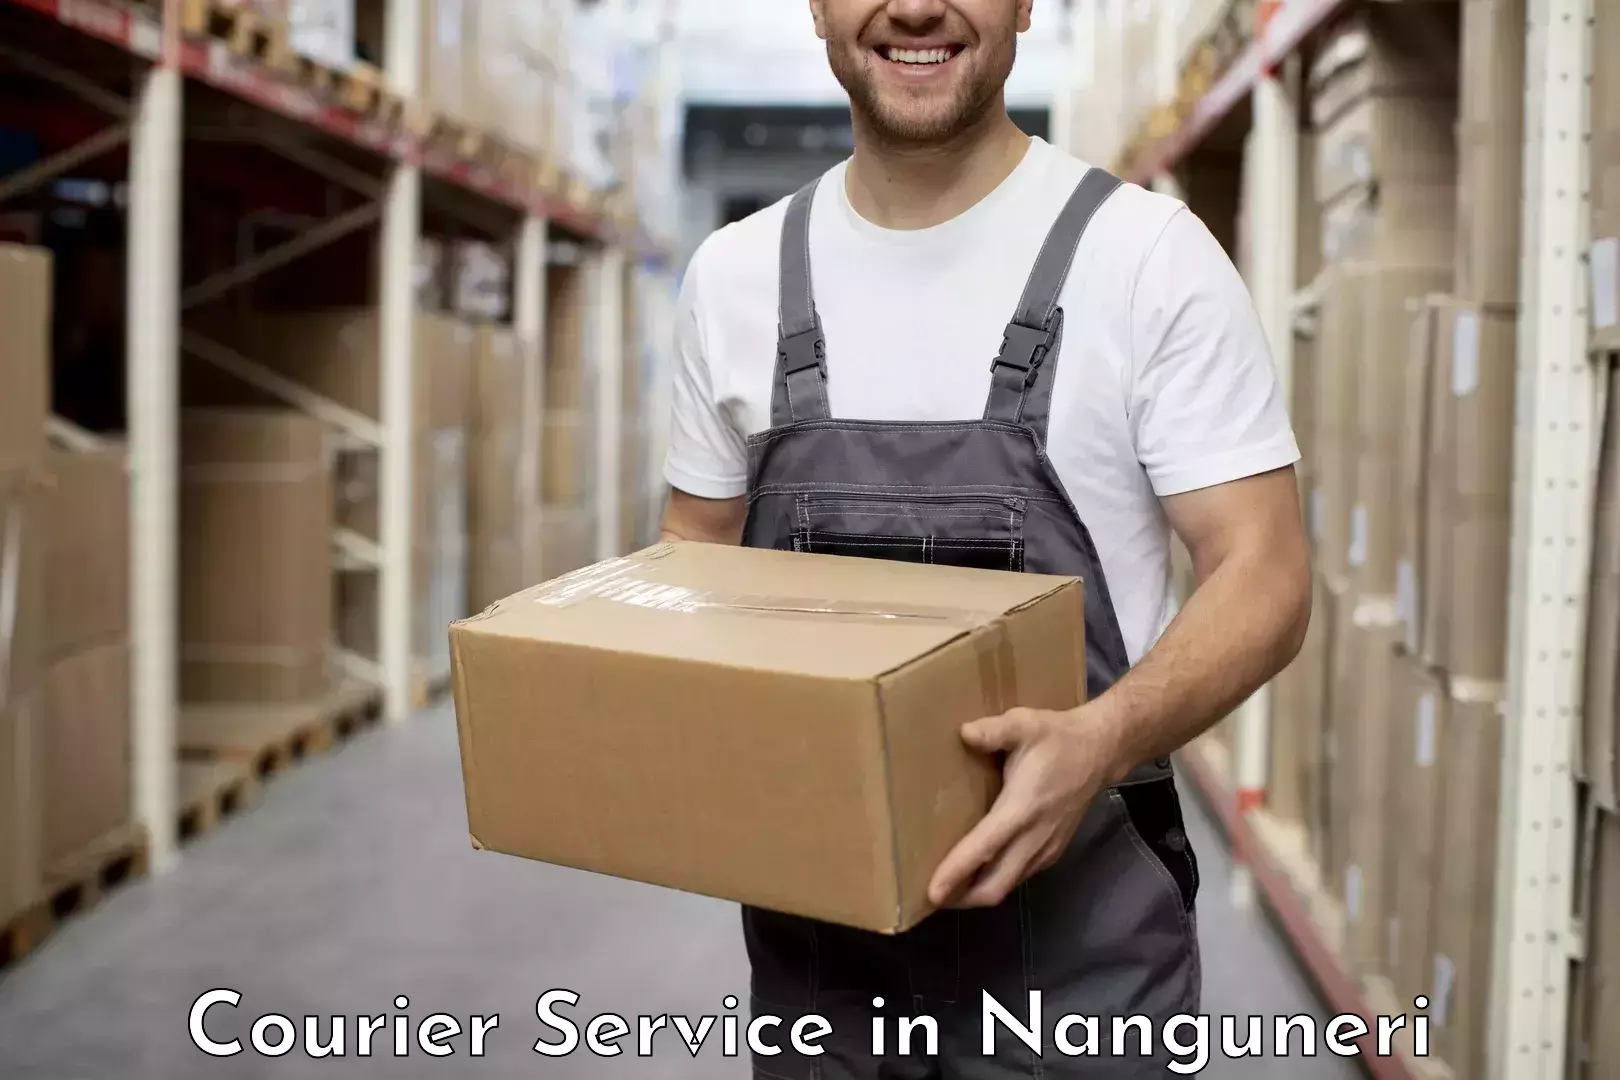 High-capacity shipping options in Nanguneri